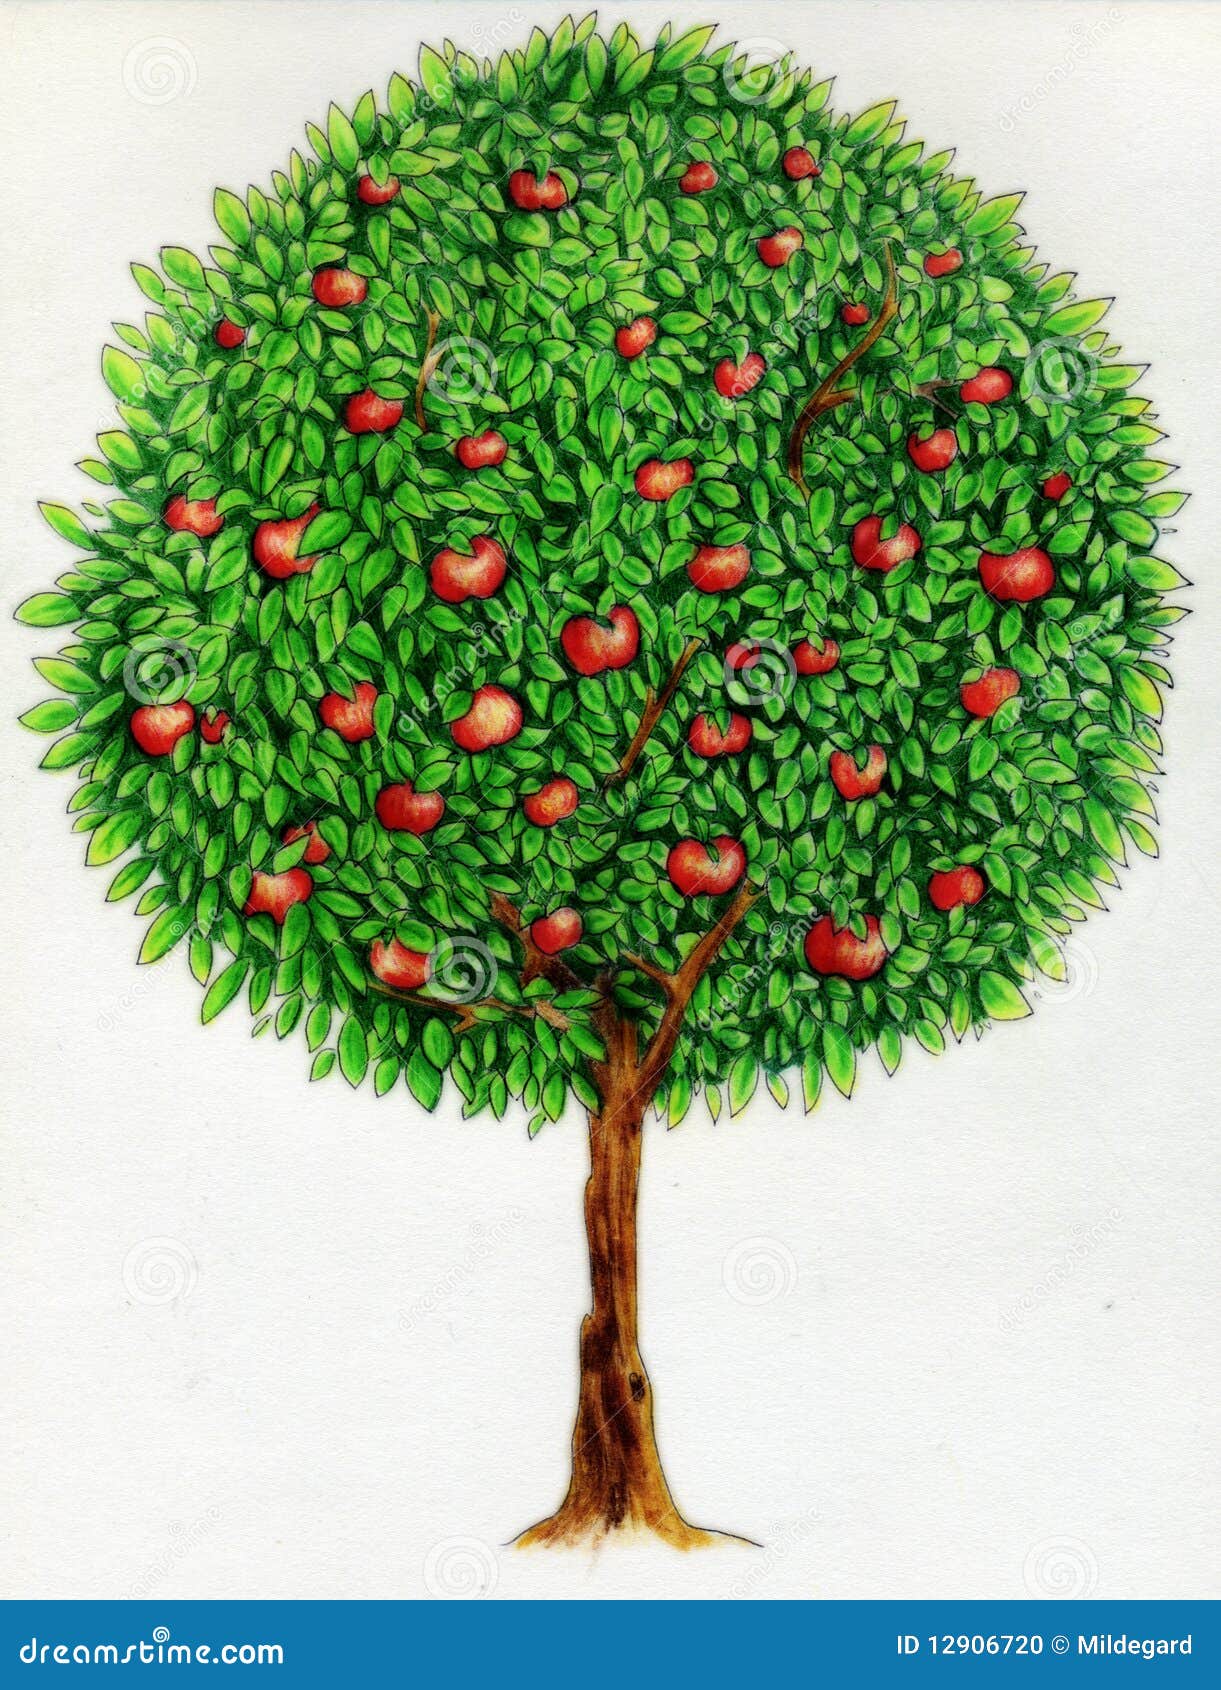 Apple tree drawing stock illustration. Illustration of circle ...